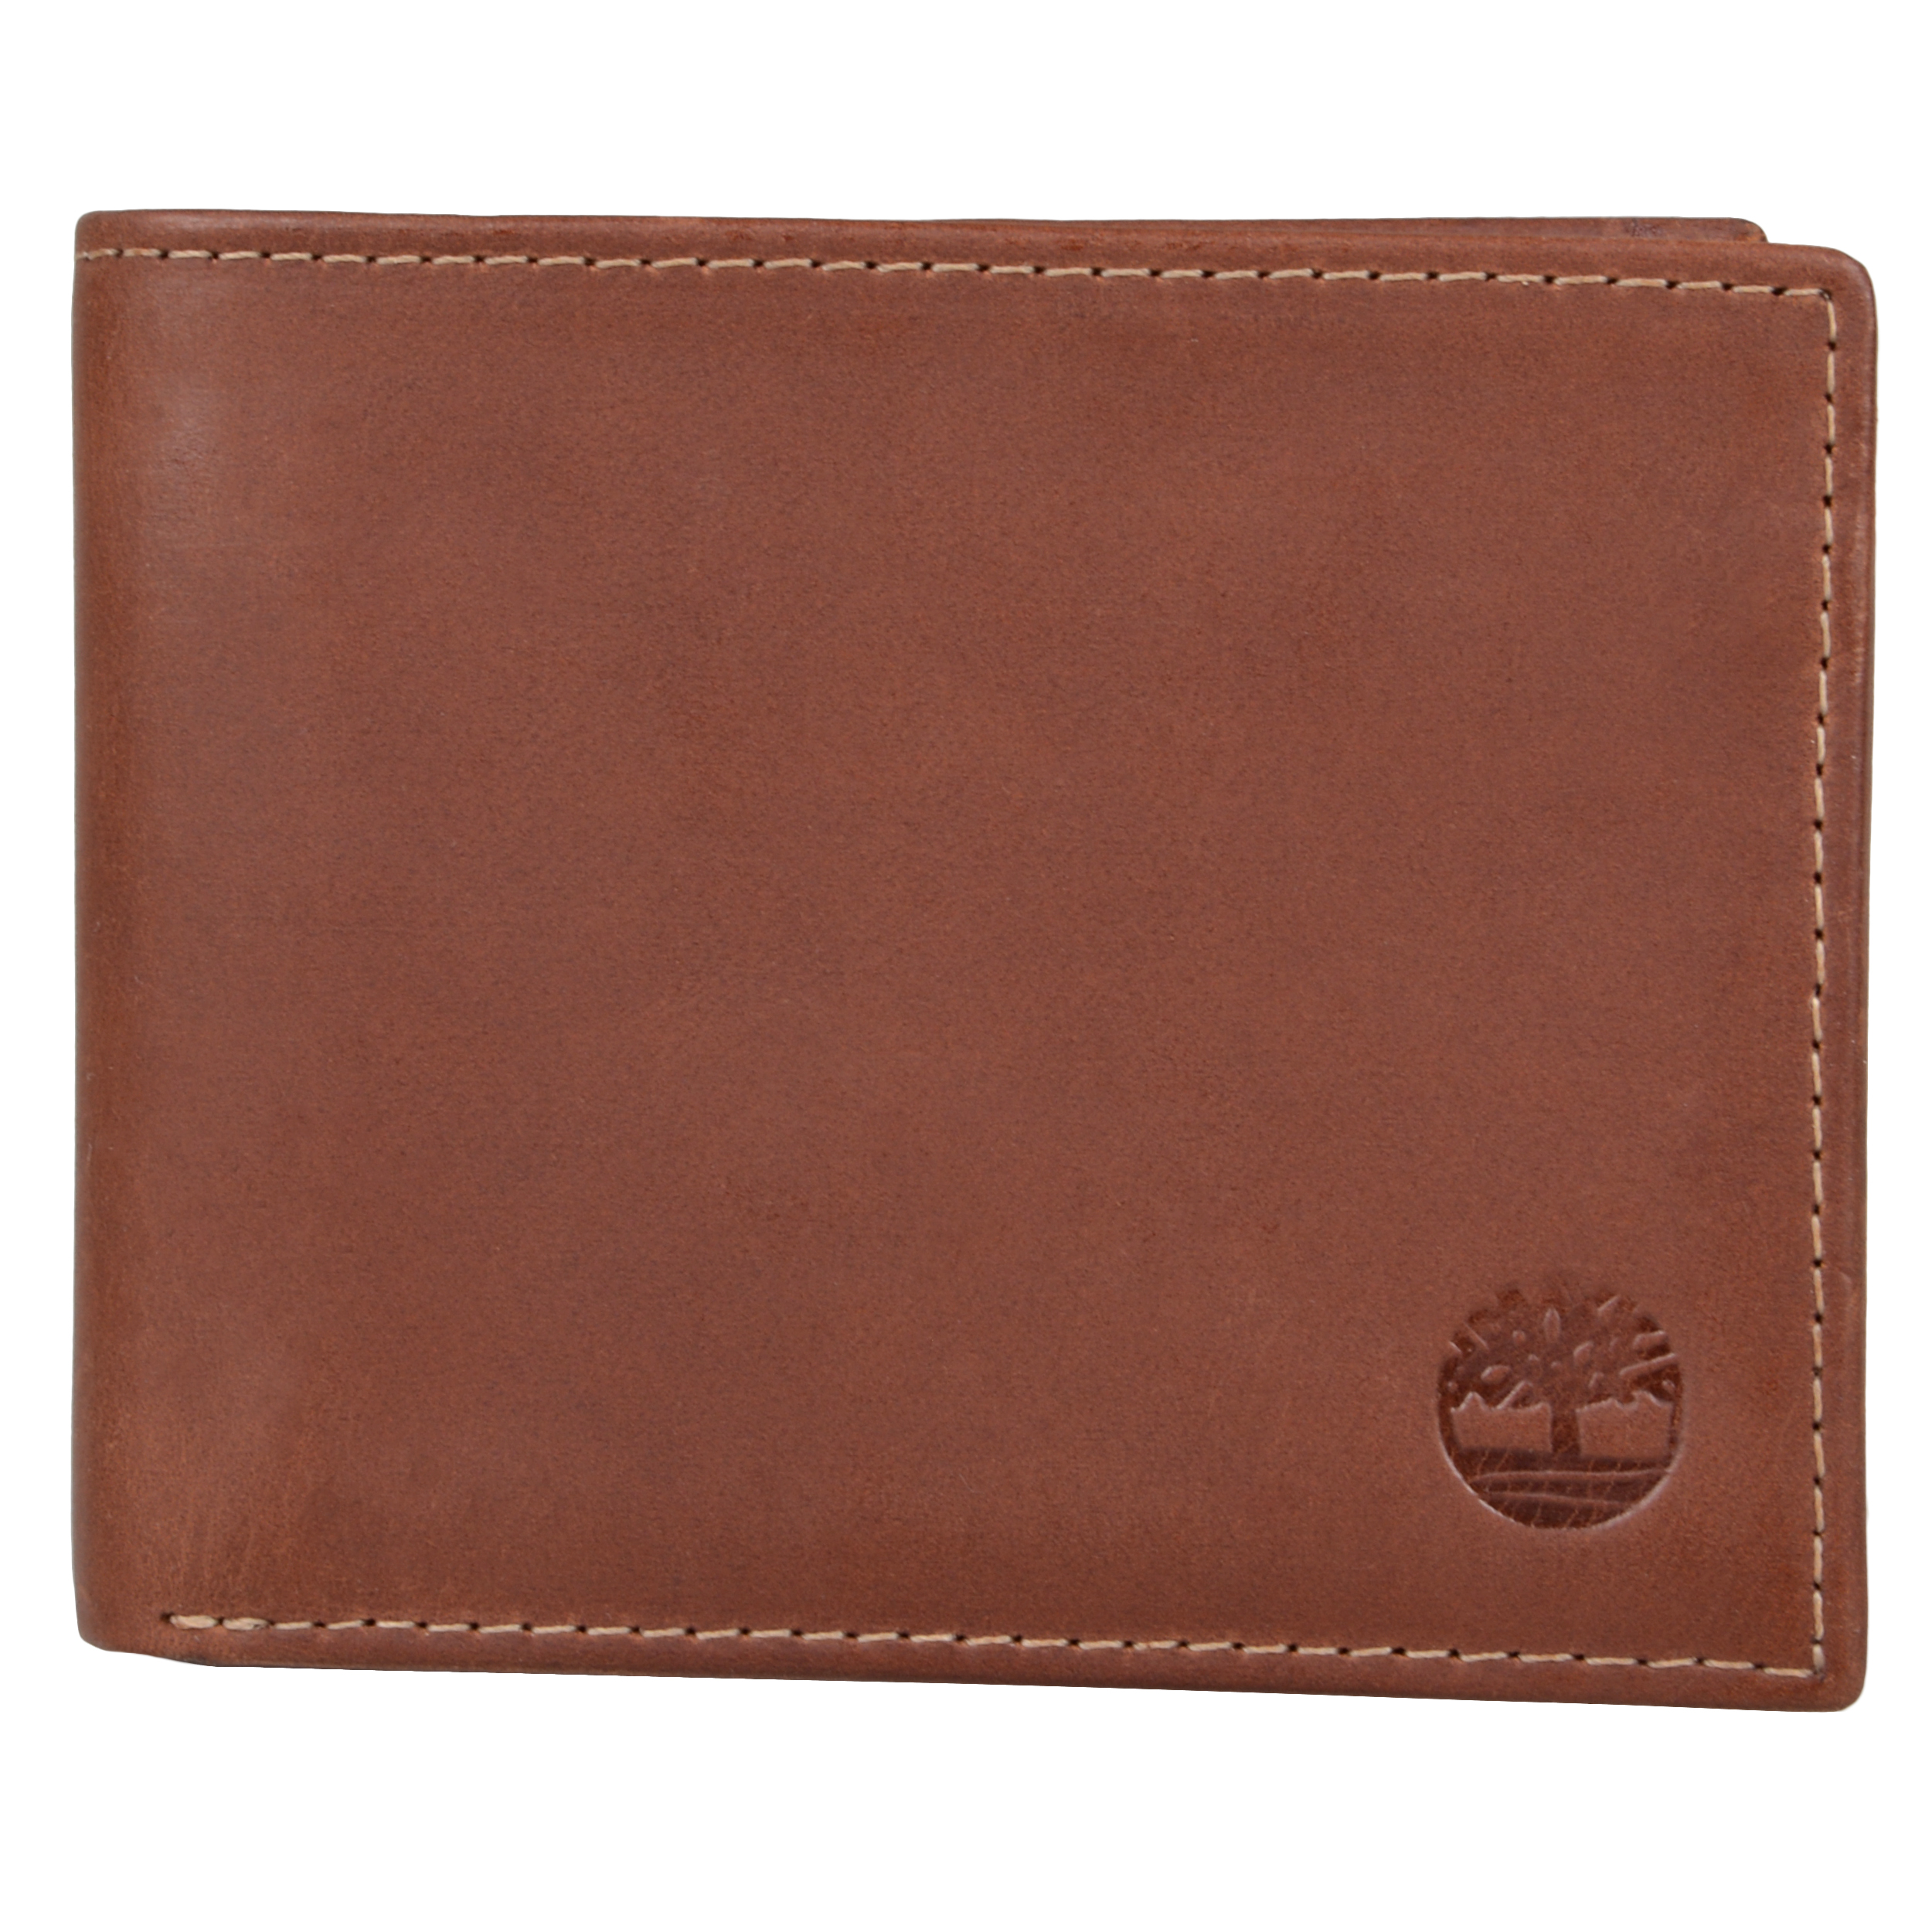 Timberland Mens Genuine Leather Bifold Passcase Wallet | eBay